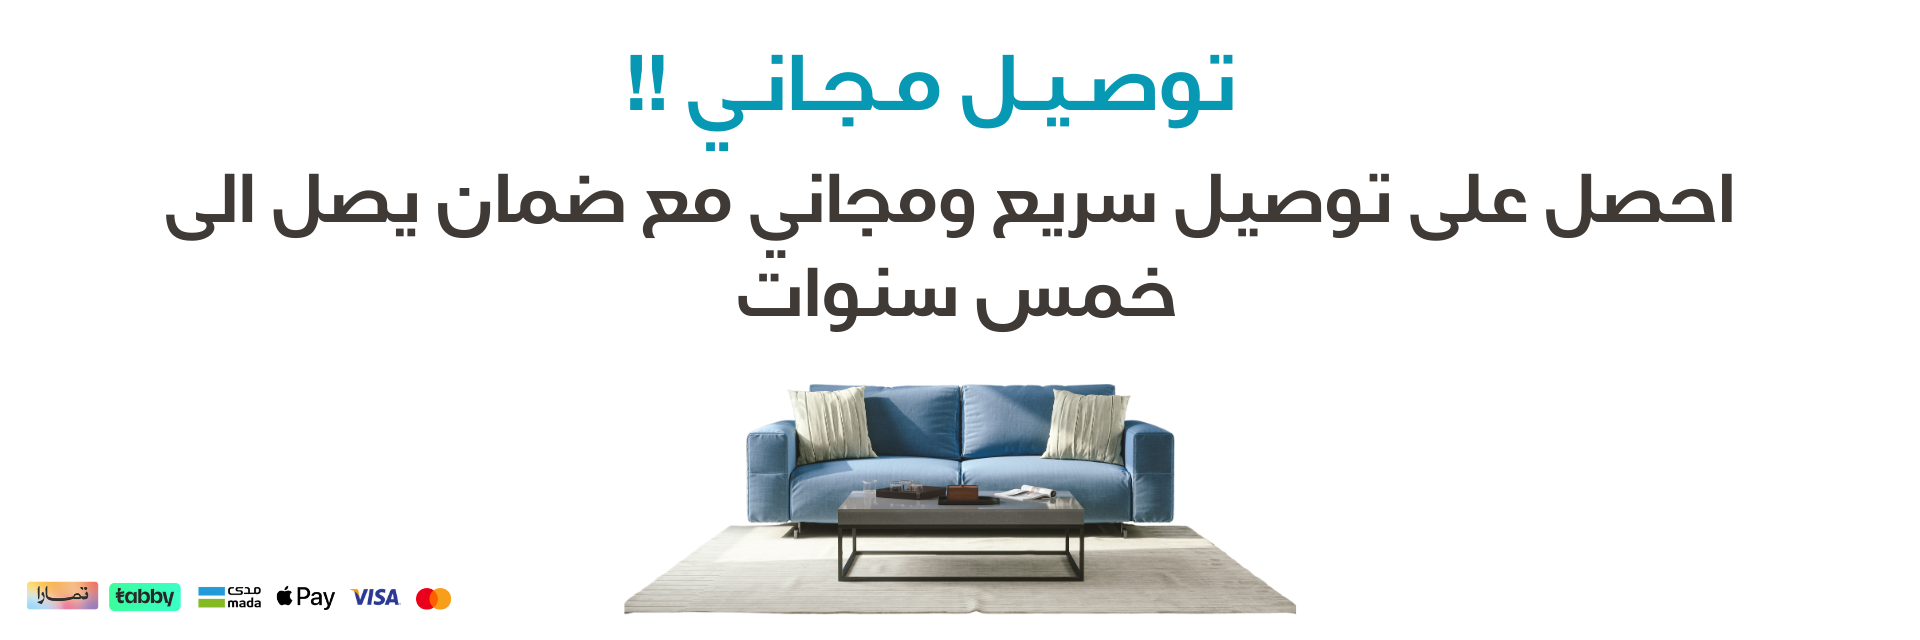 Modern minimalist furniture promo instagram post (1000 x 500 px) (1920 x 640 px) (13)